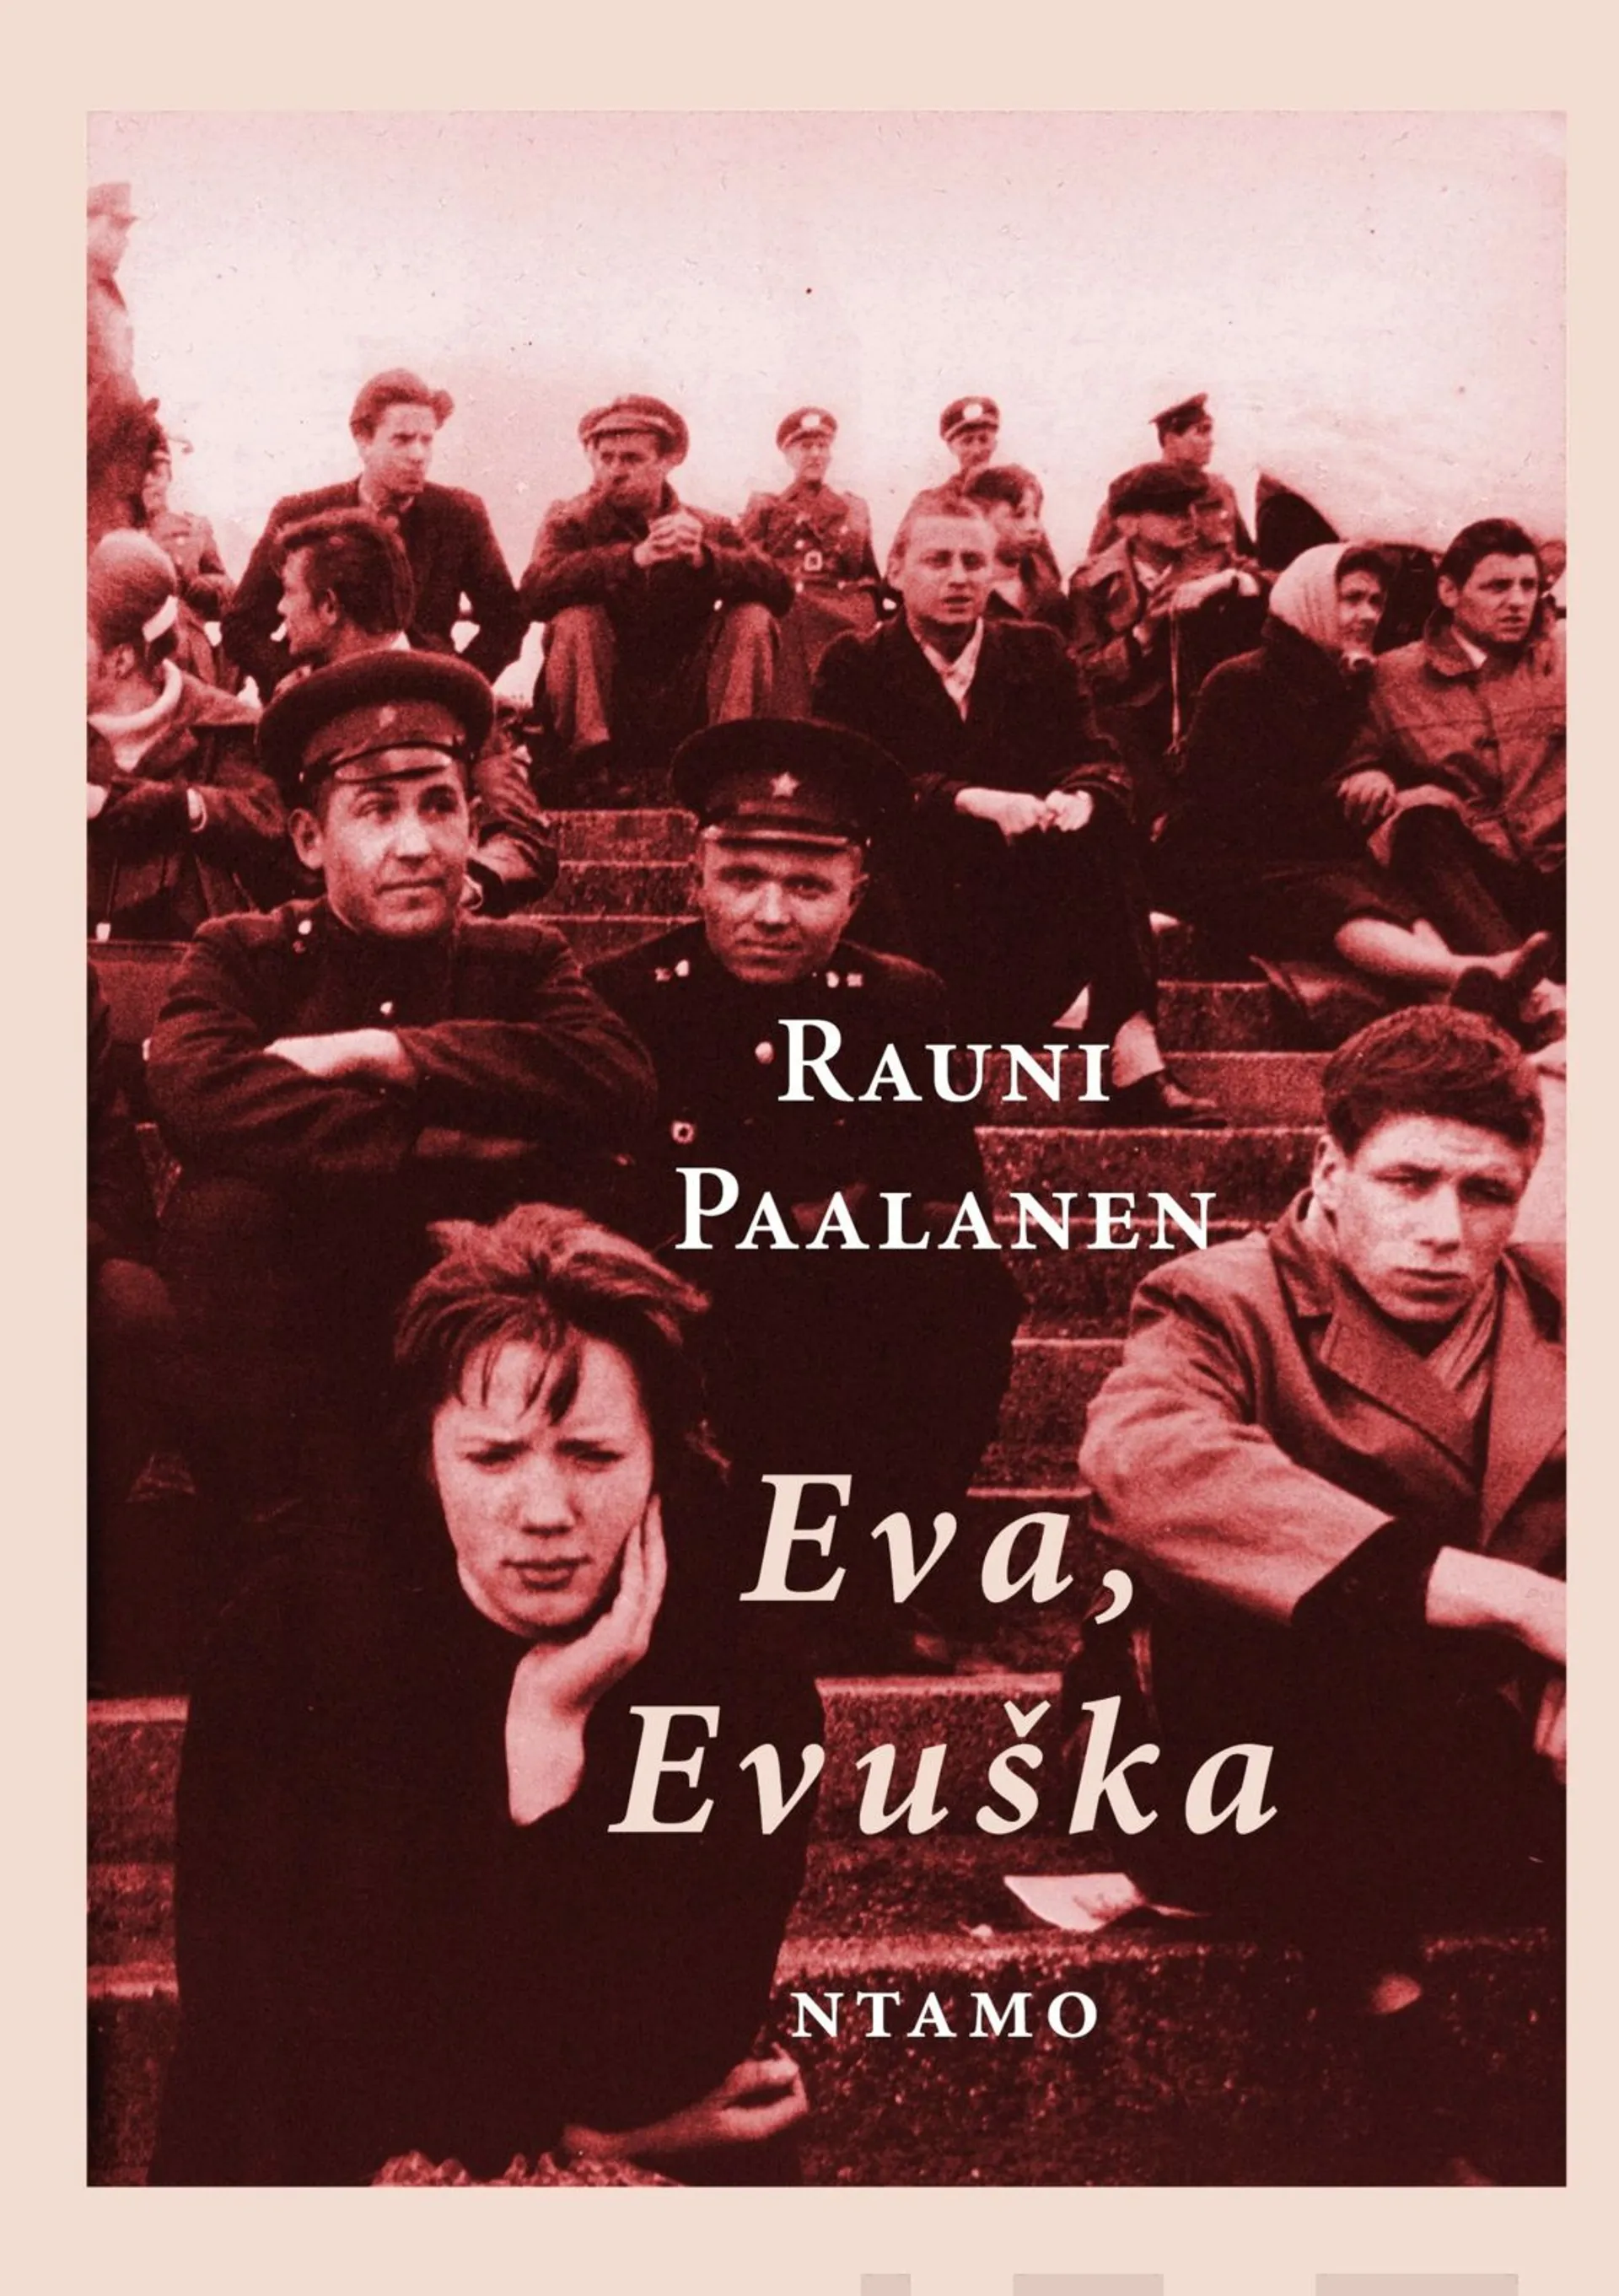 Paalanen, Eva, Evushka